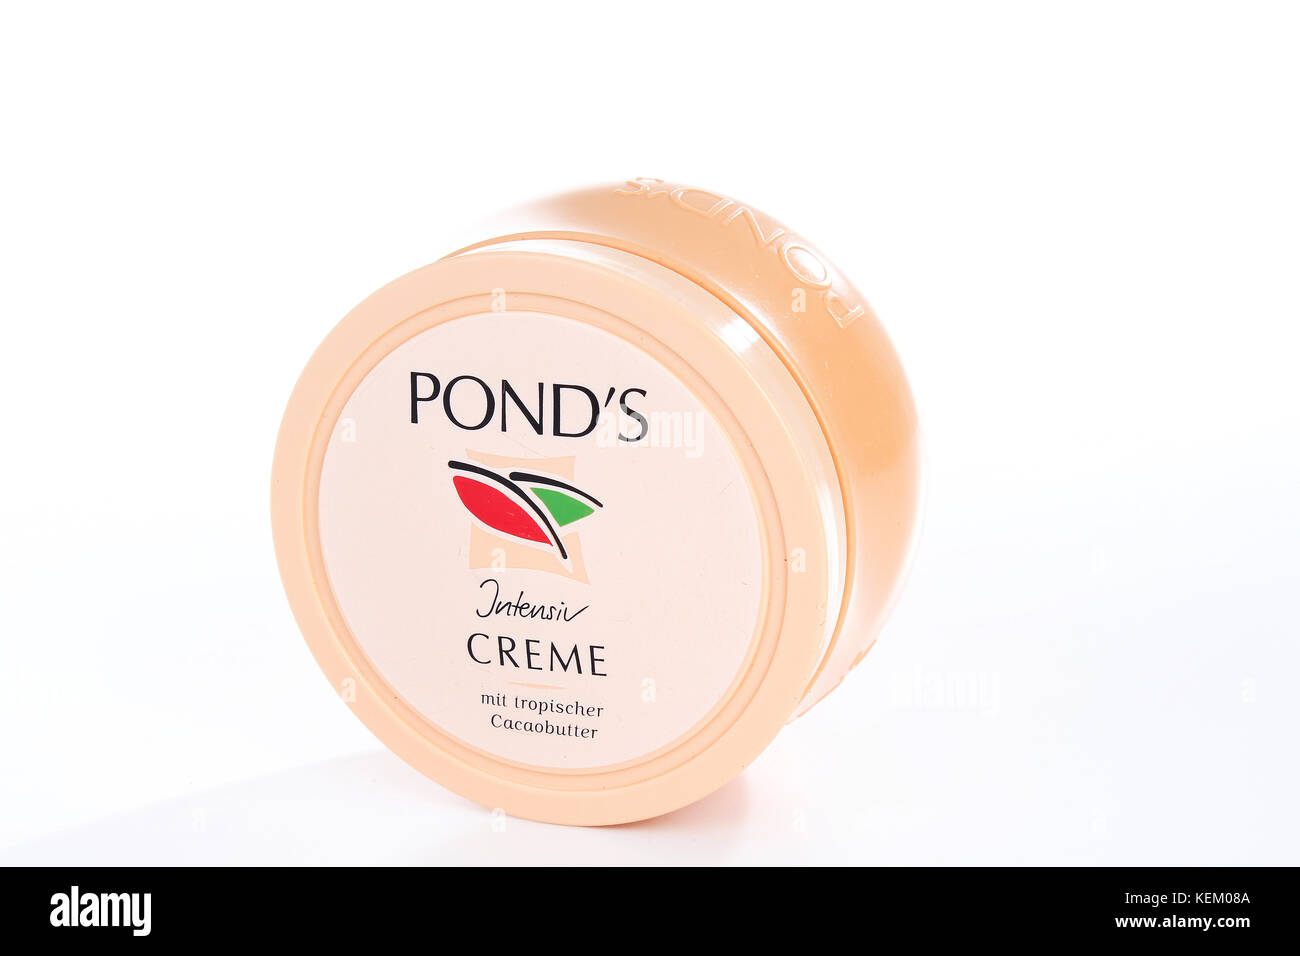 Ponds Pnd 's creme body lotion Stock Photo - Alamy